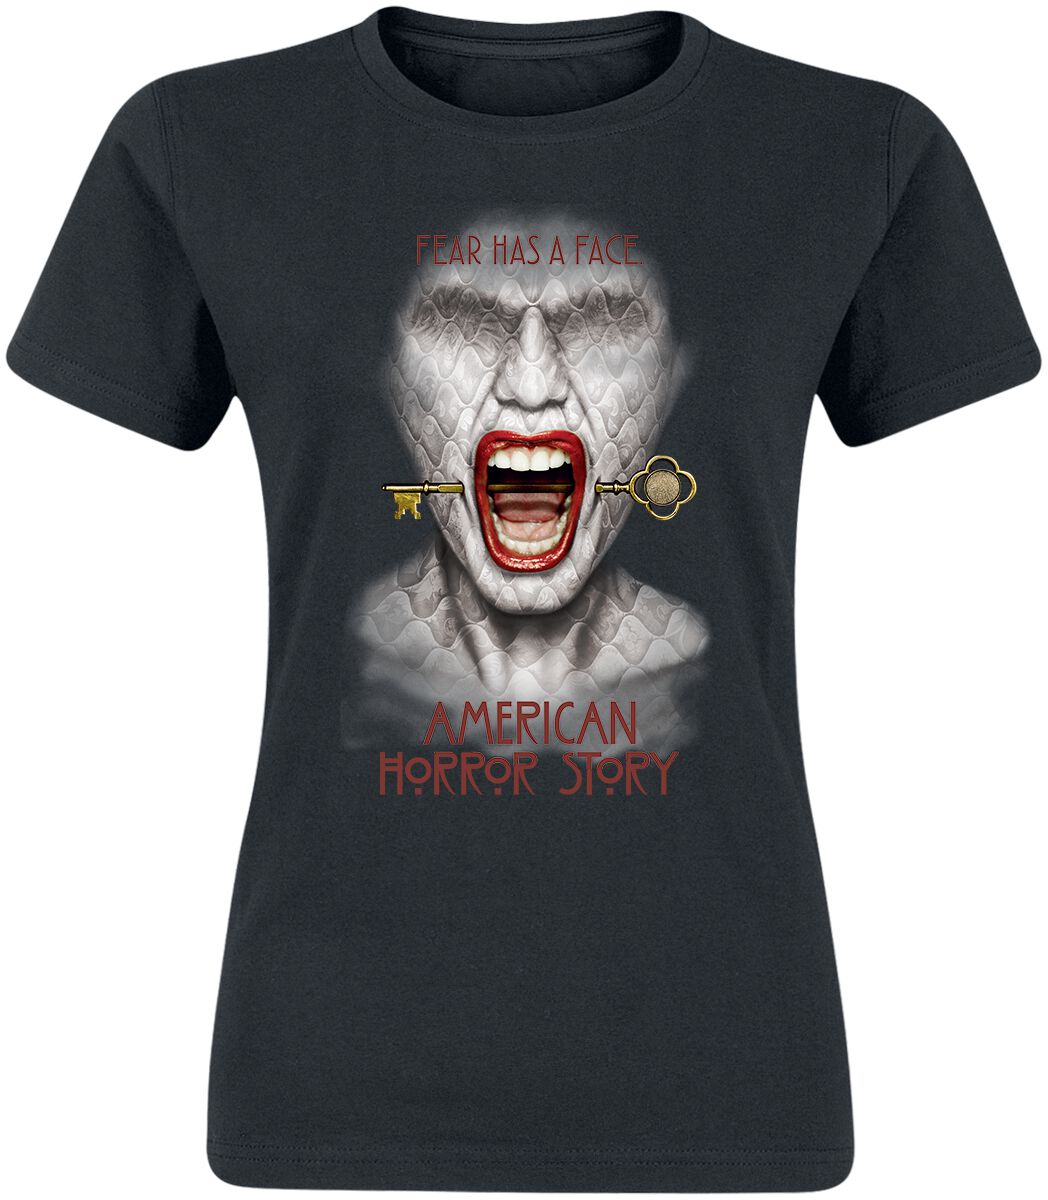 American Horror Story Fear Has A Face T-Shirt black